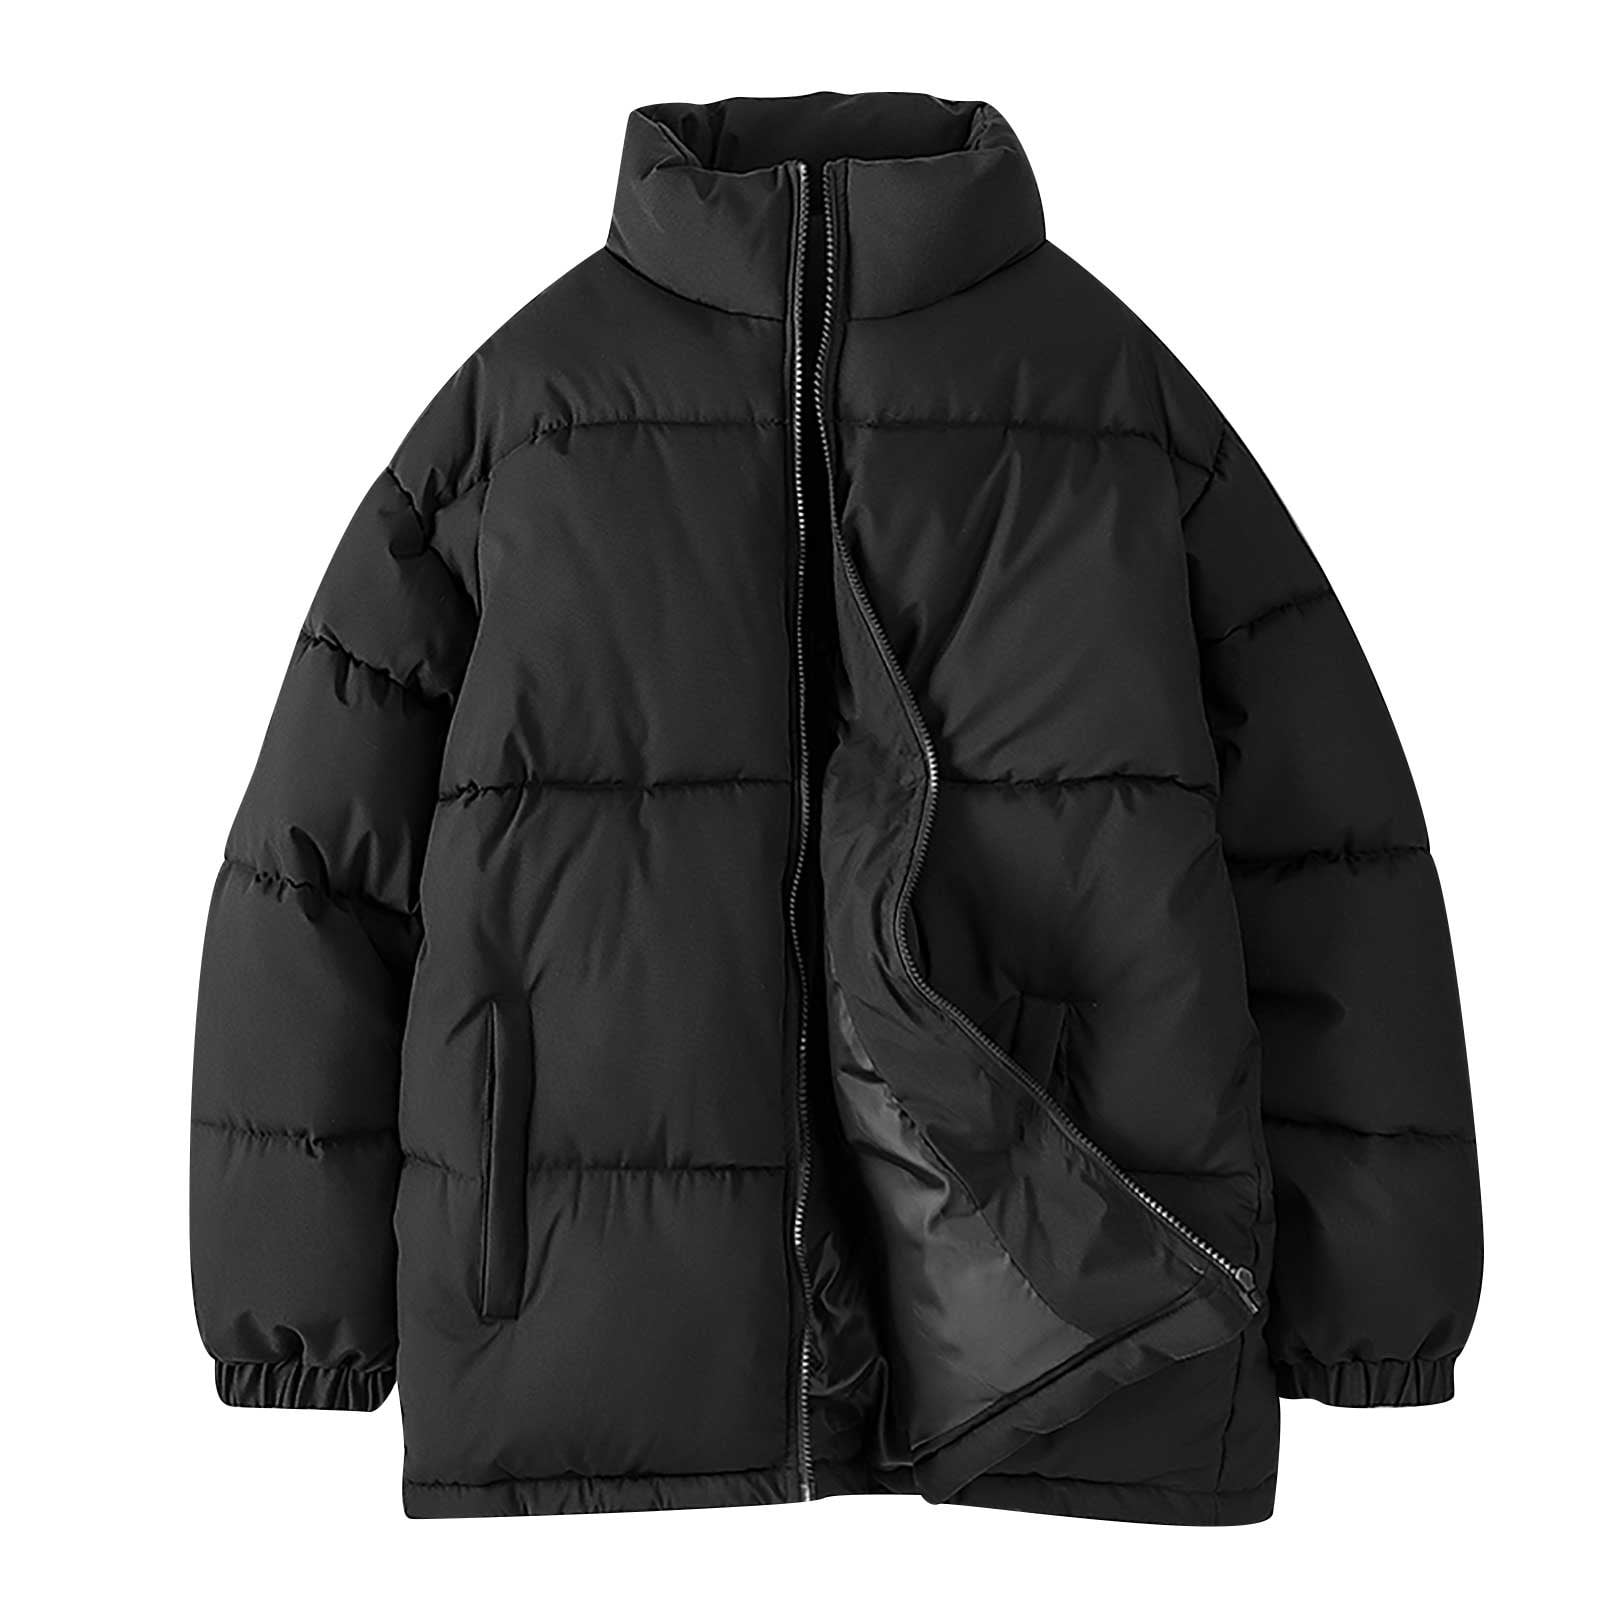 VSSSJ Men's Winter Coats Big and Tall Solid Color Long Sleeve Zip Up ...